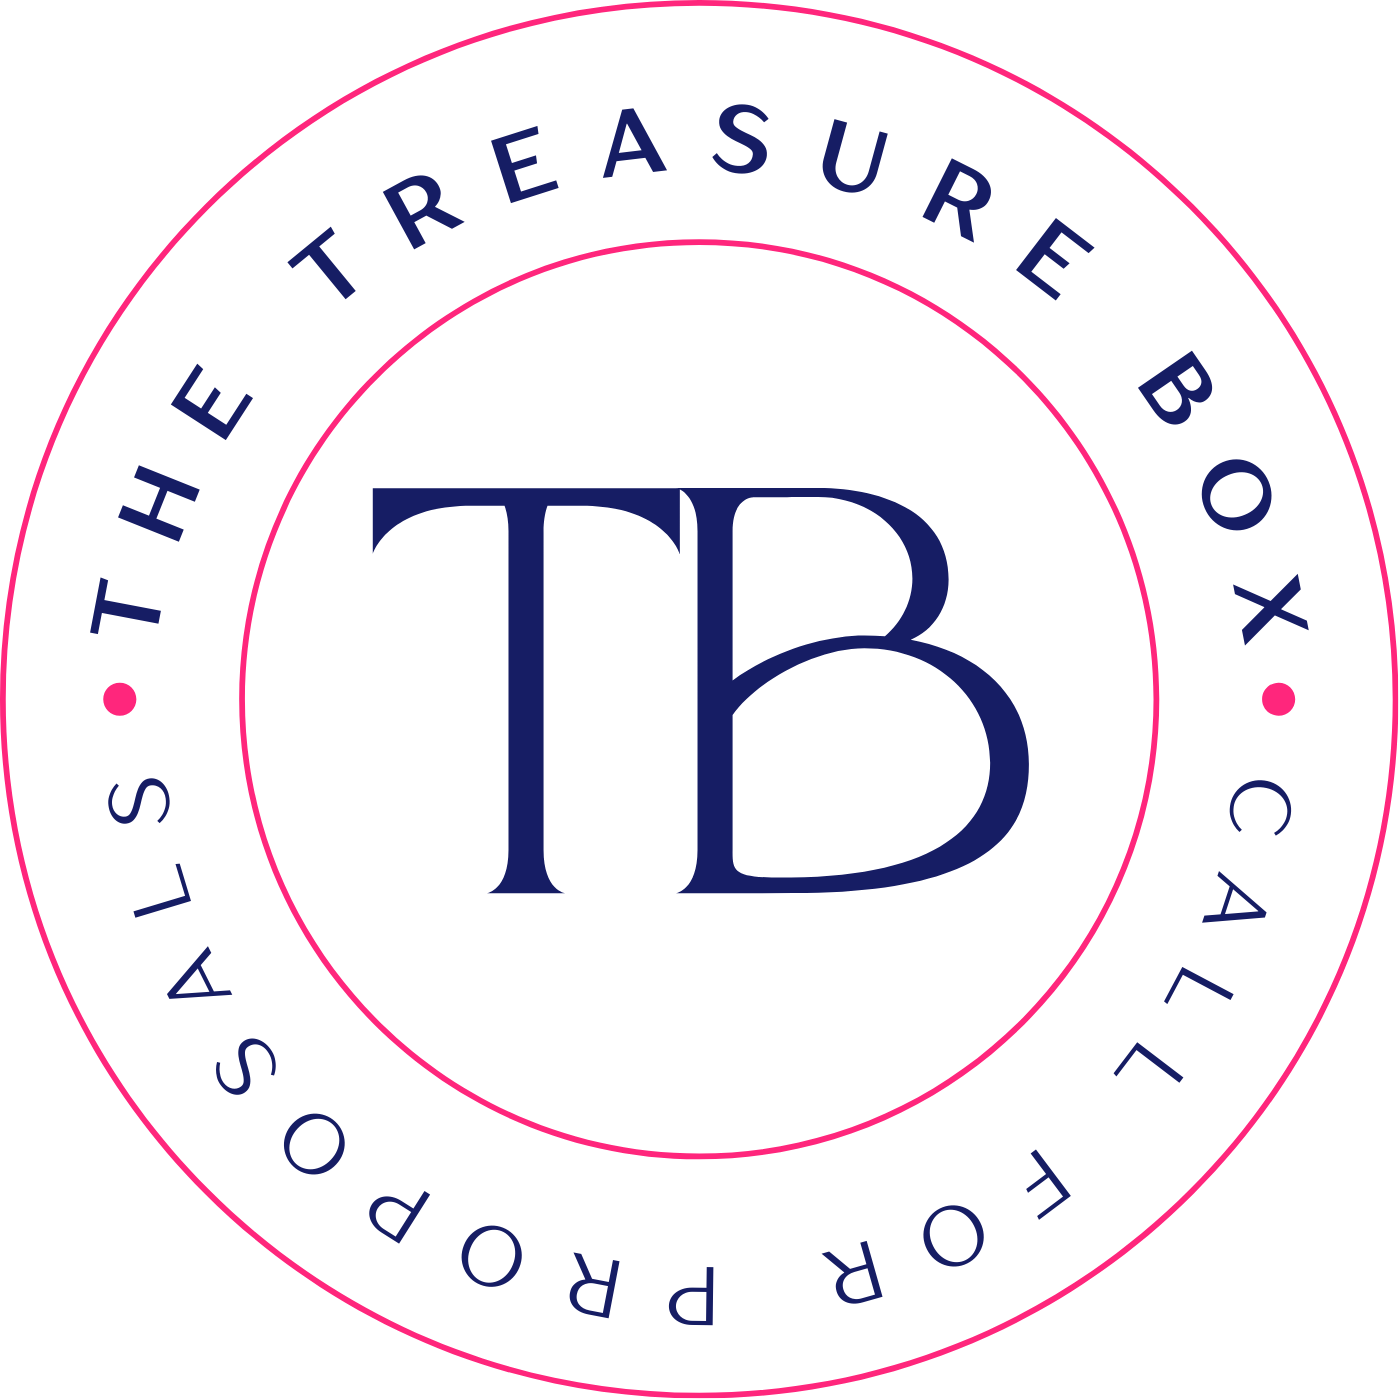 The Treasure Box